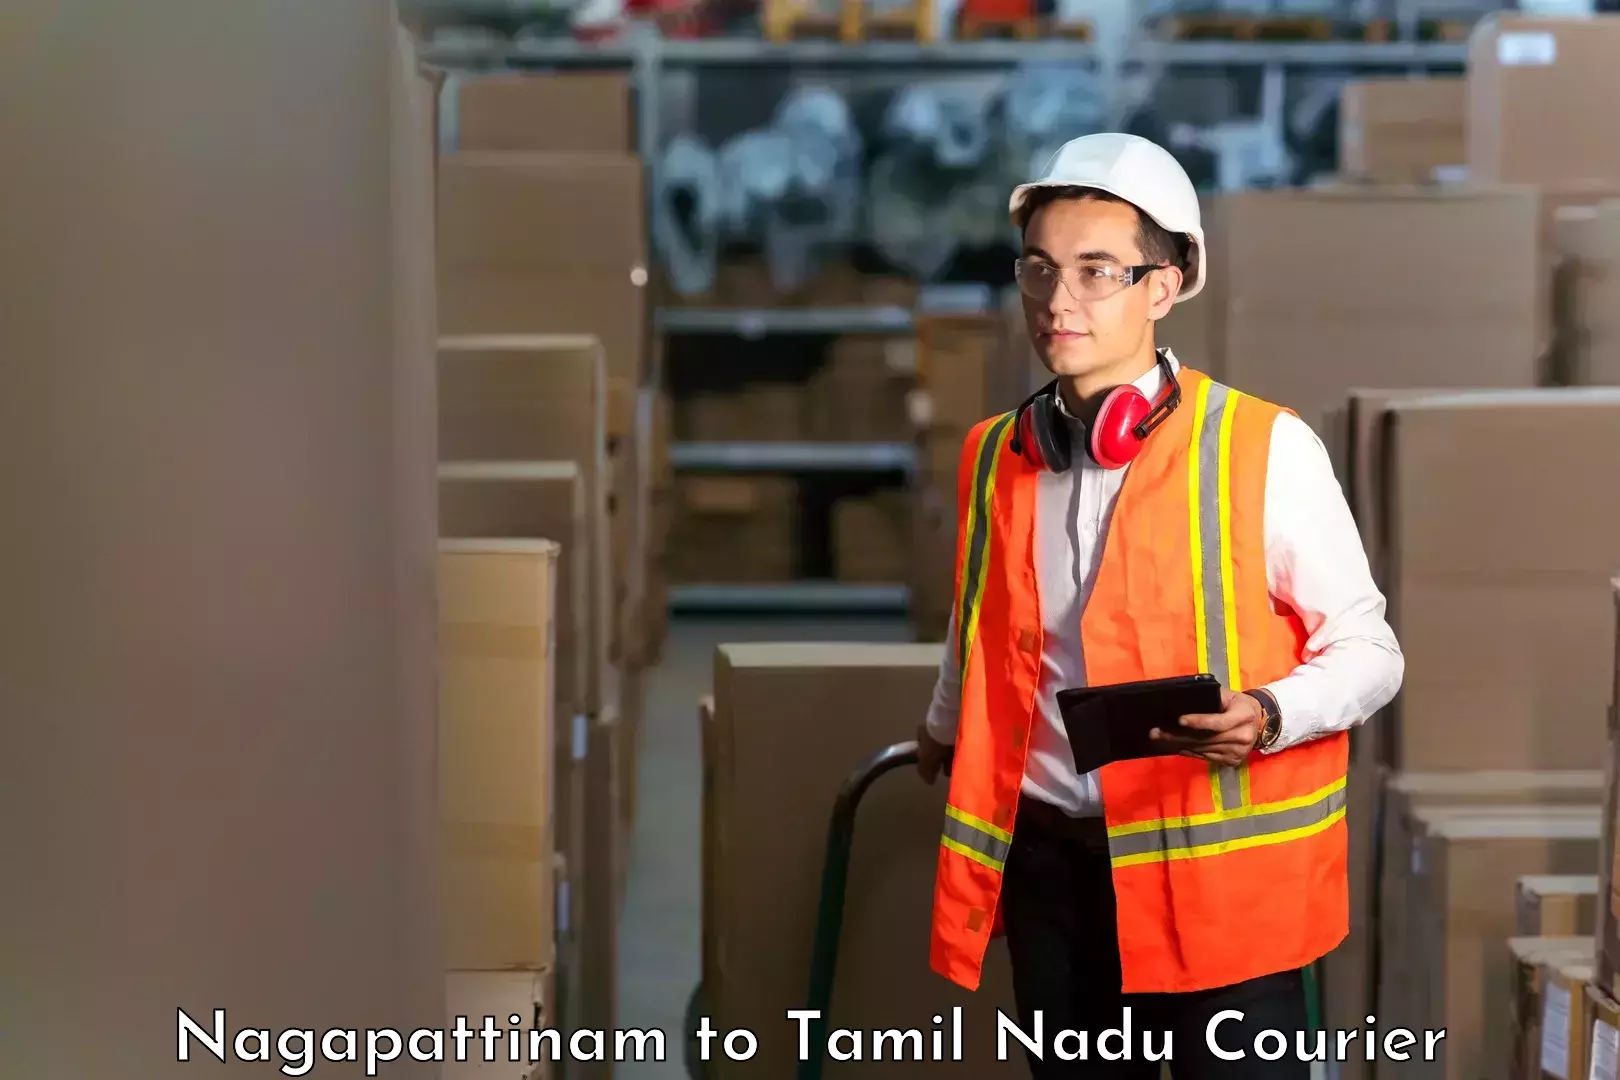 Reliable courier service Nagapattinam to Tiruchengodu